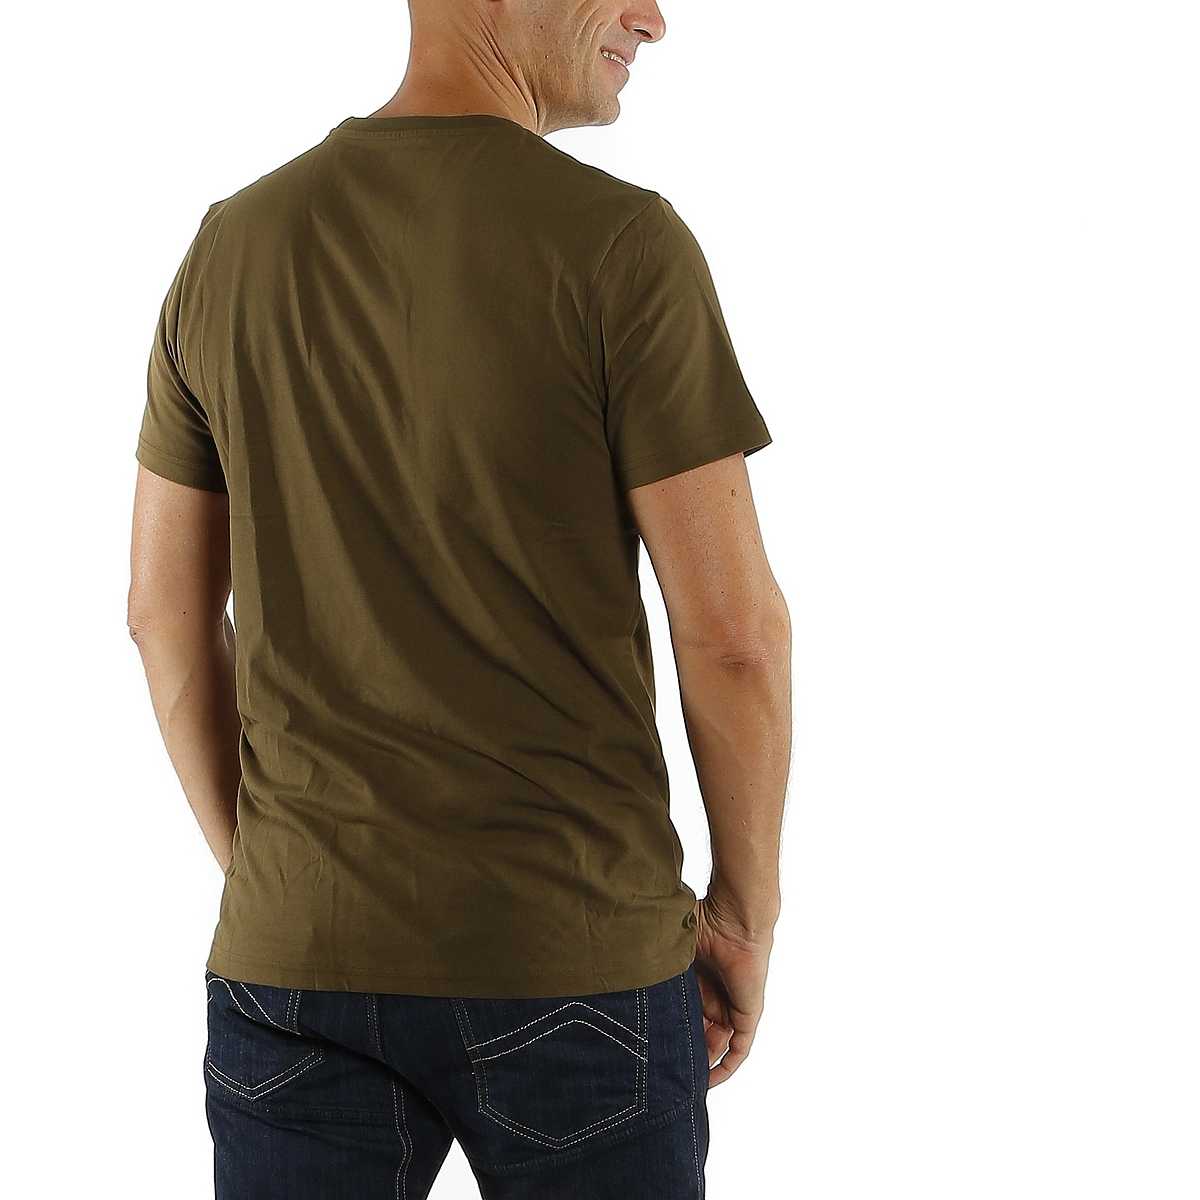 Dainese T-Shirt Adventure Dream Dainese Military-Olive/Noir 